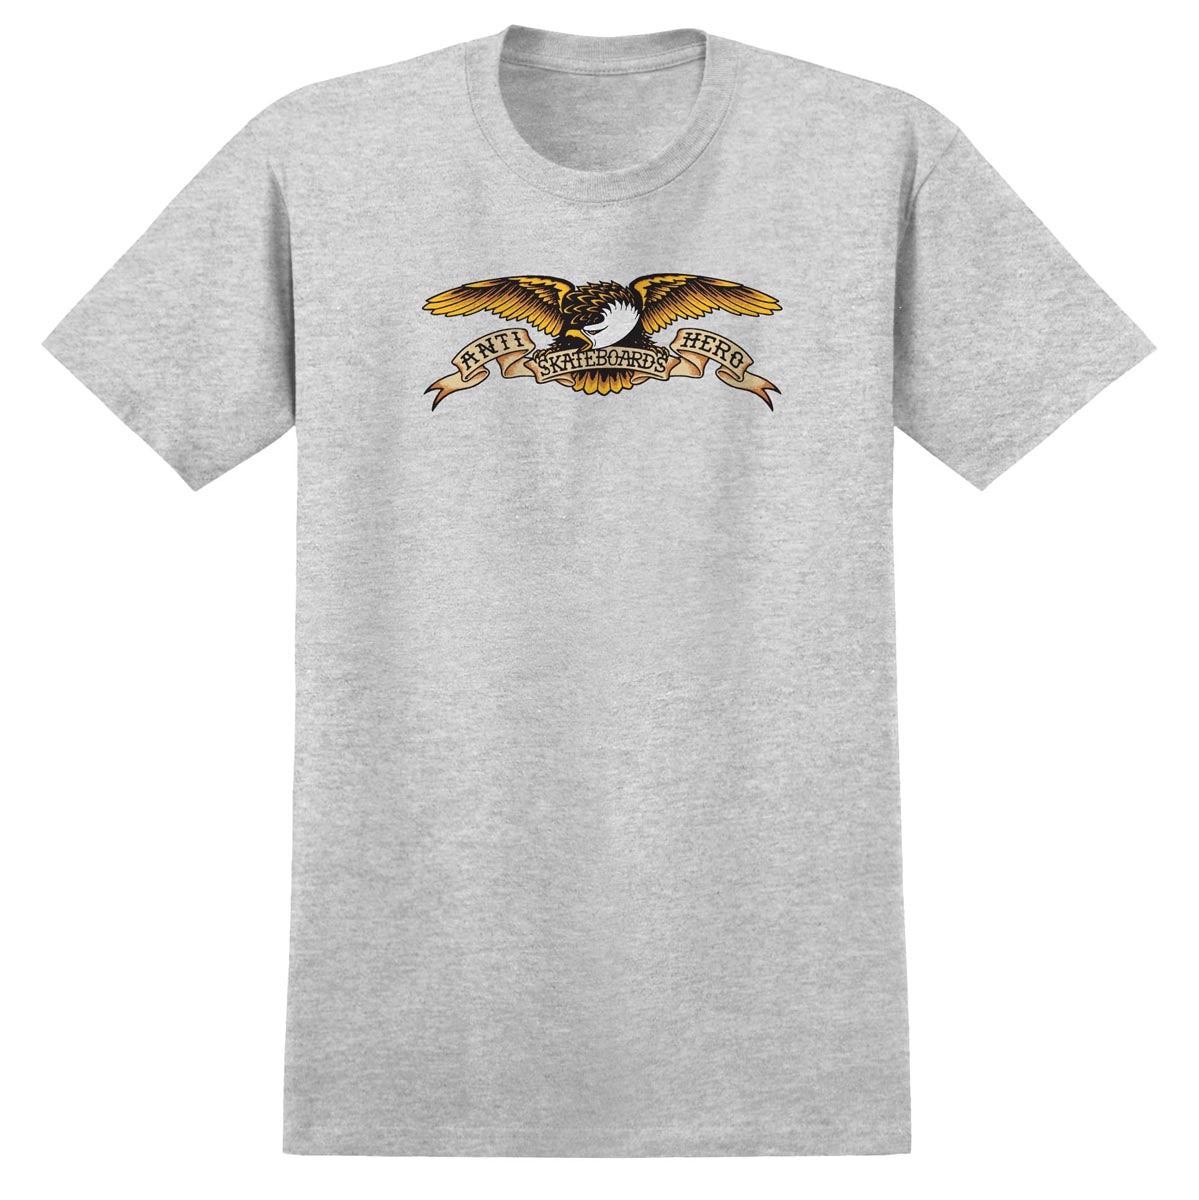 Anti-Hero Eagle T-Shirt - Sport Grey/Black Multi image 1